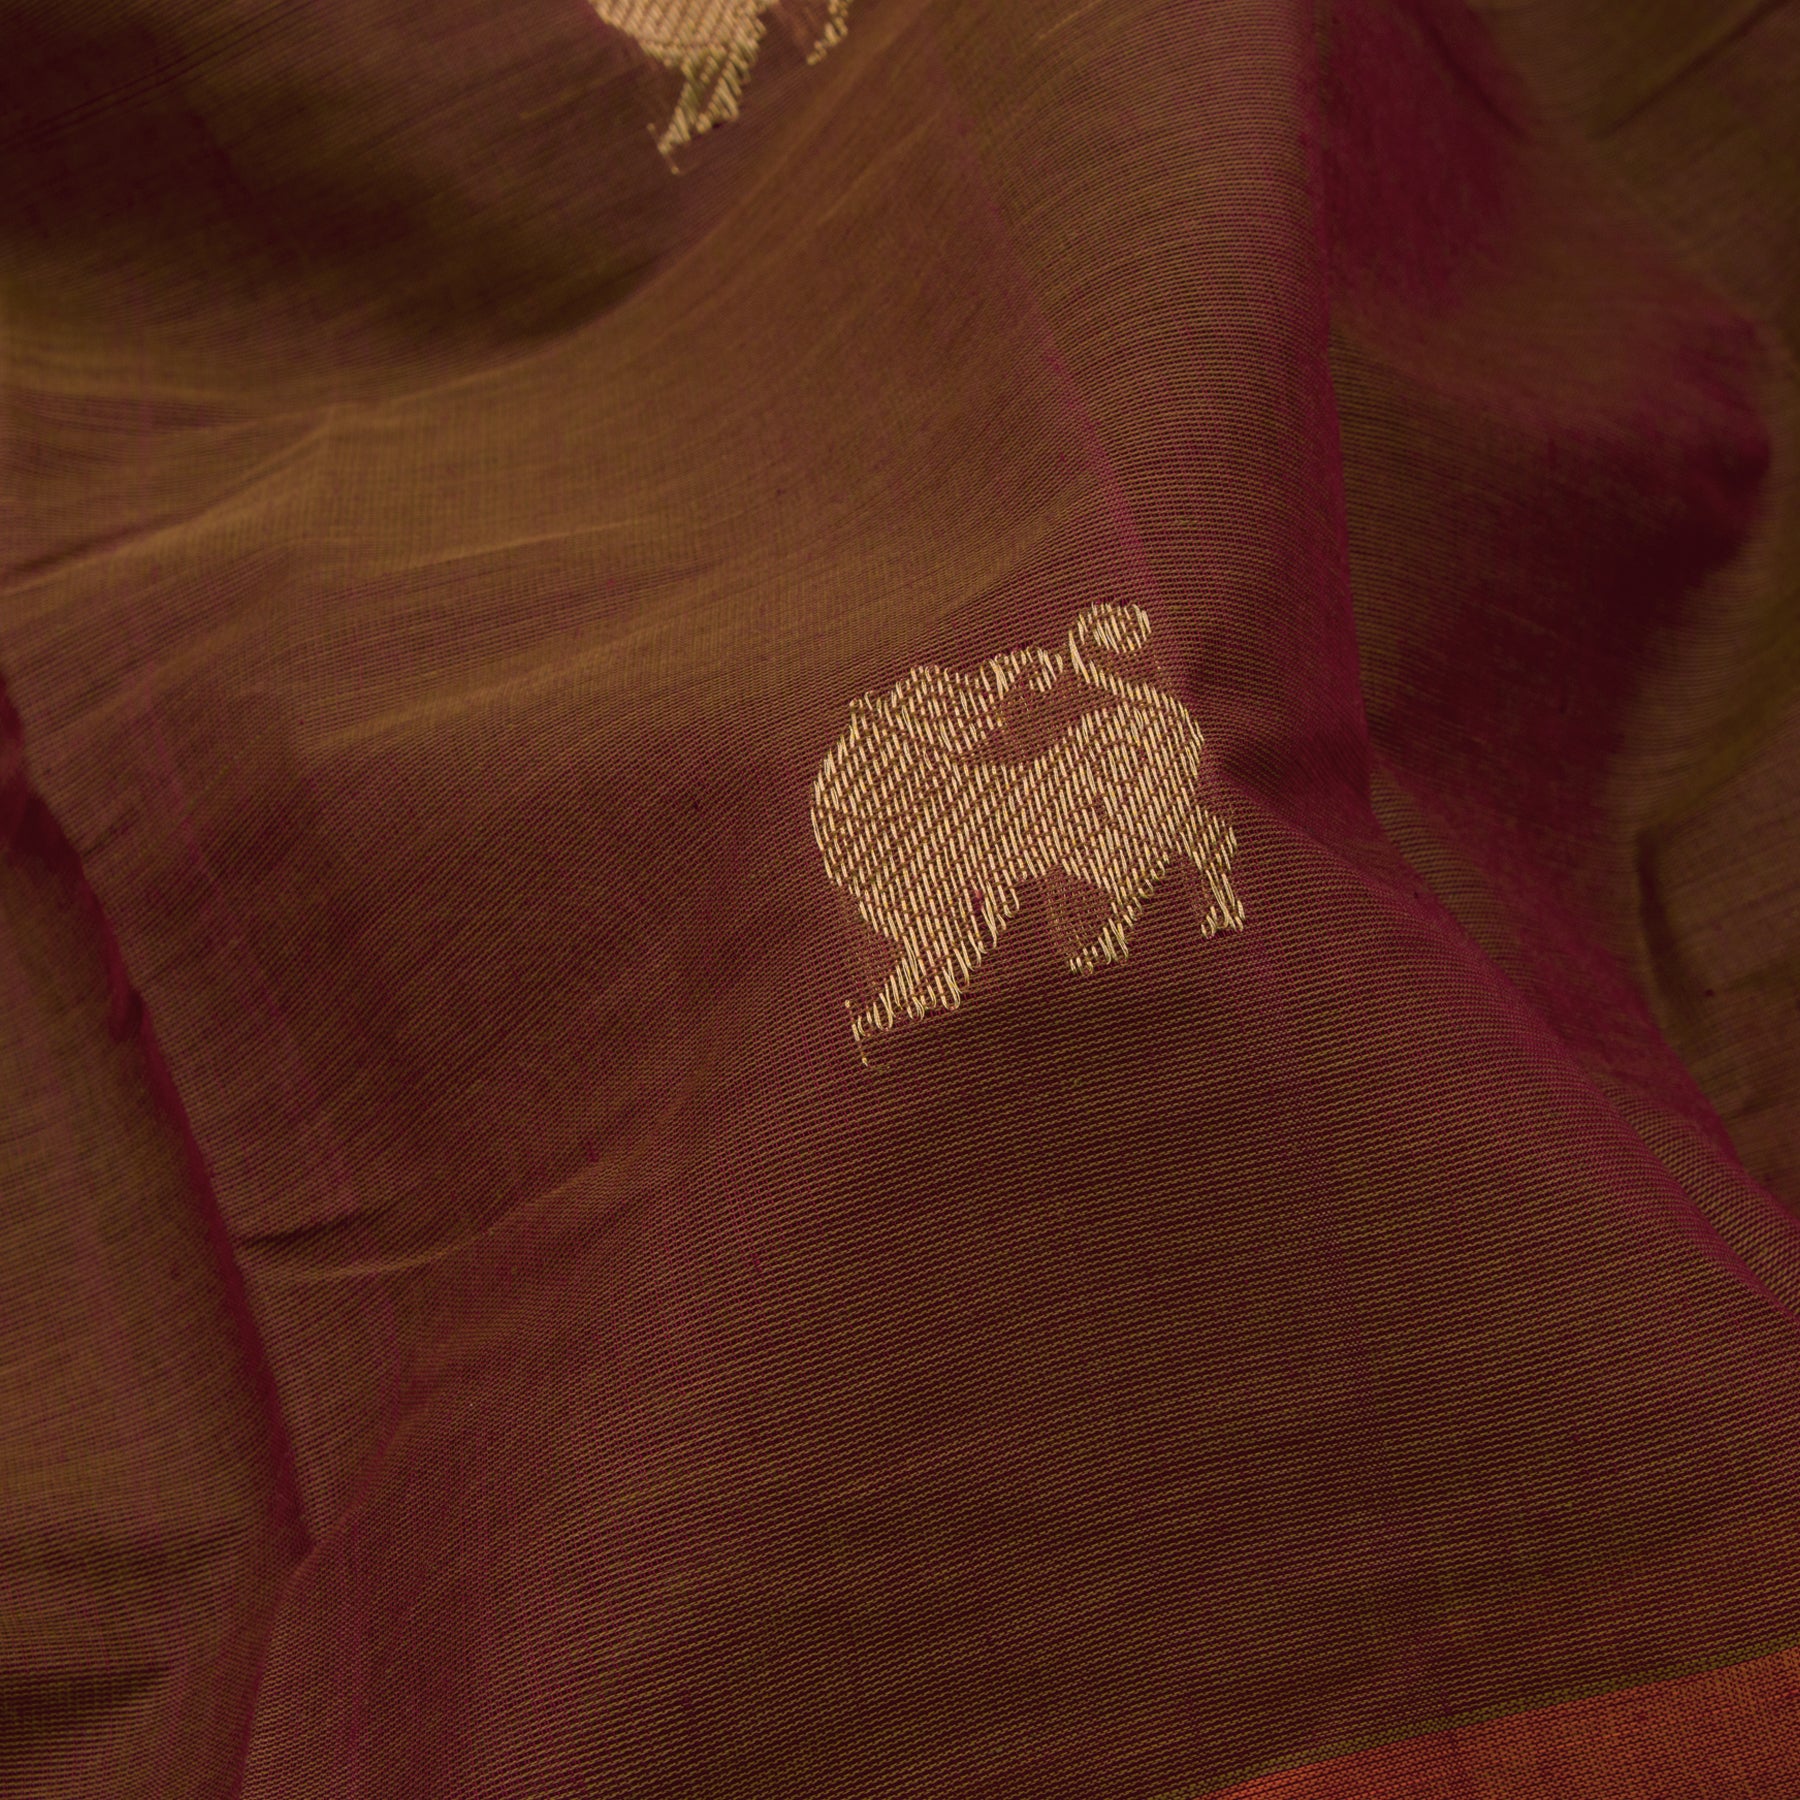 Kanakavalli Kanchi Cotton Sari 23-613-HS003-03401 - Fabric View